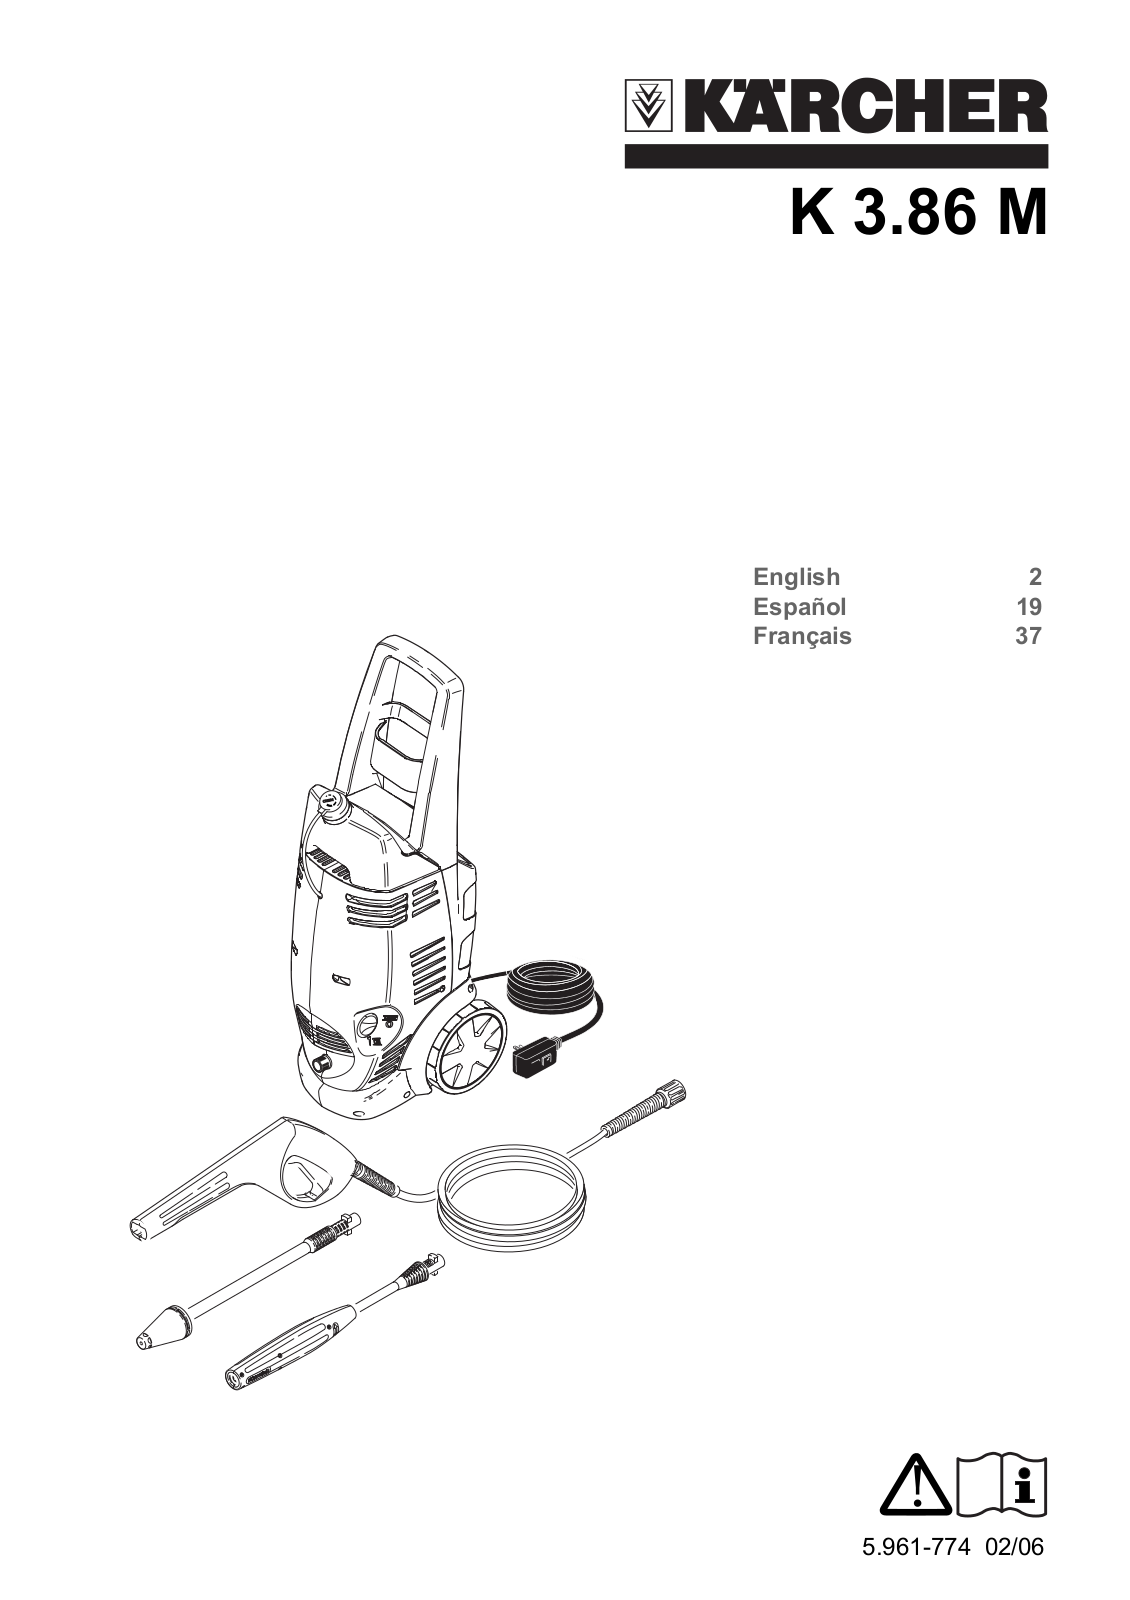 Karcher K 3.86 M Manual